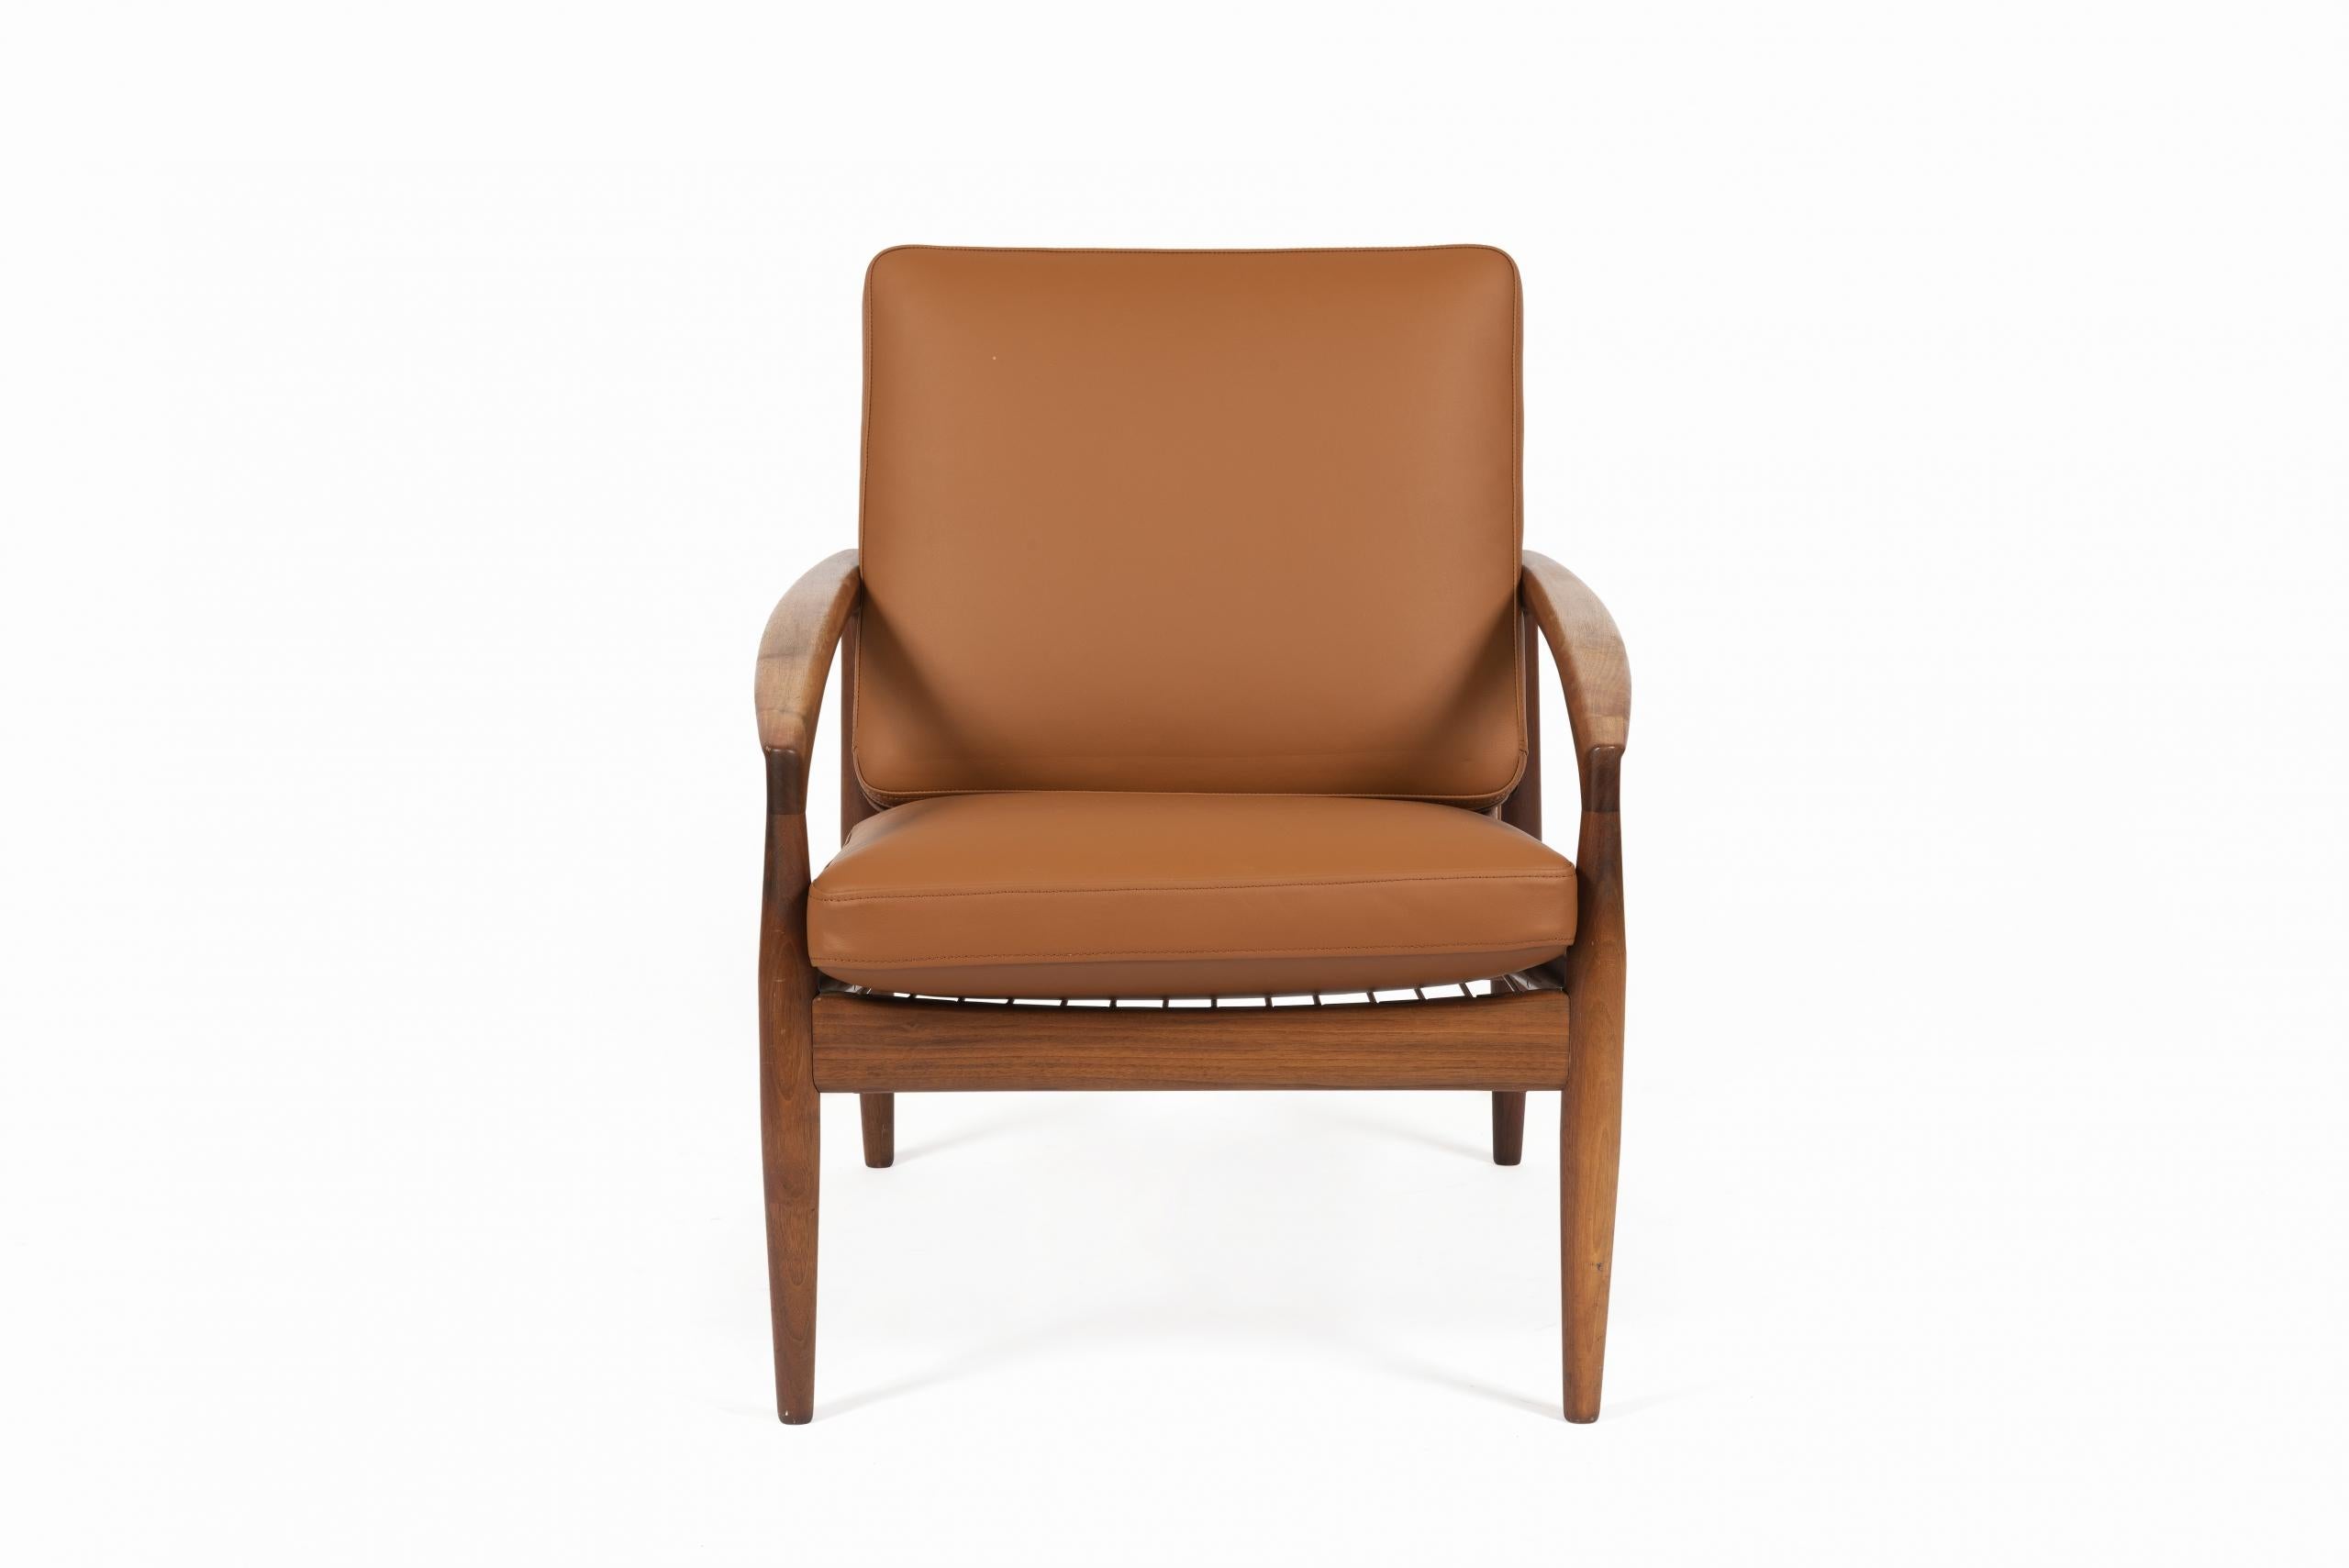 Paire de fauteuils design, modèle 121, 'Paper Knife', Kai Kristiansen pour Magnus Olesen, 1956.

Die Struktur ist aus massivem Teakholz mit einem Dossier und einem moussierenden Mantel aus Cognacleder.